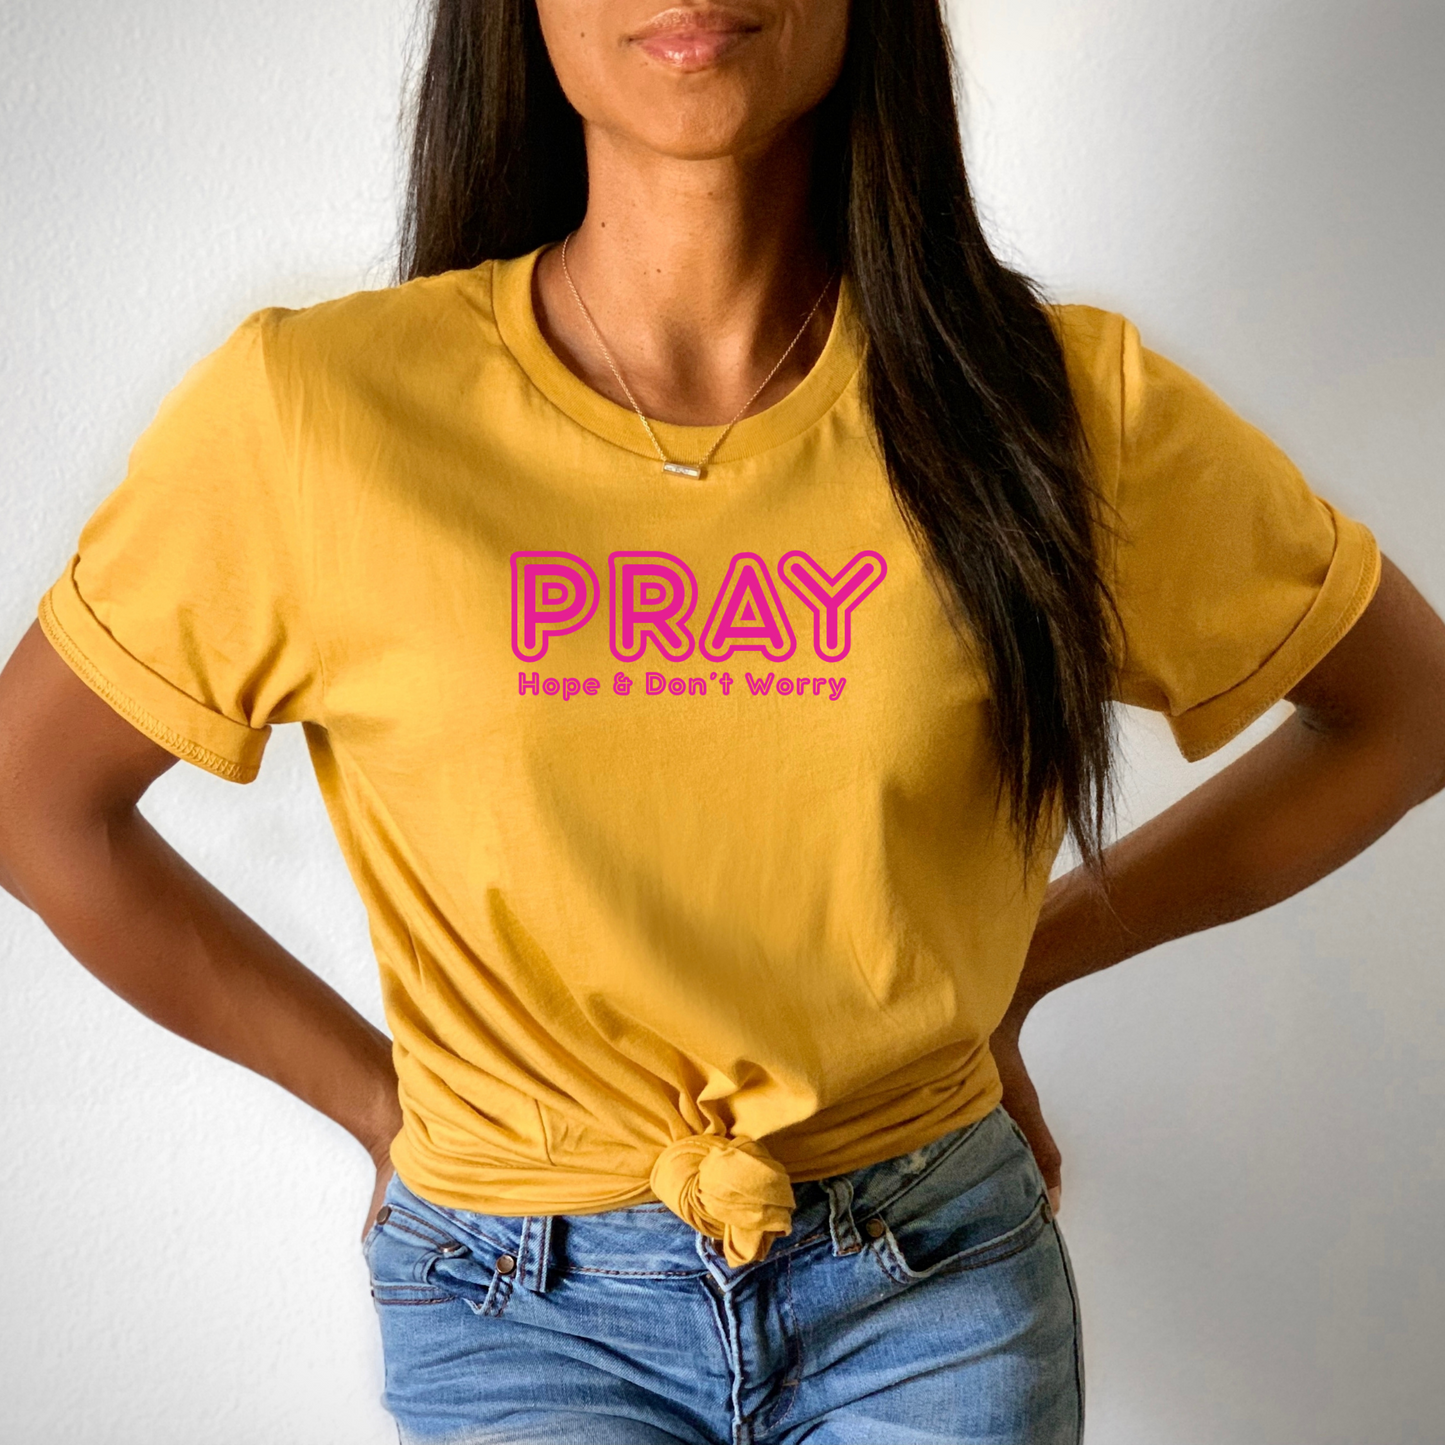 Pray Hope & Don't Worry T-Shirt, Saint Padre Pio Quote T-Shirt, Catholic T-Shirt